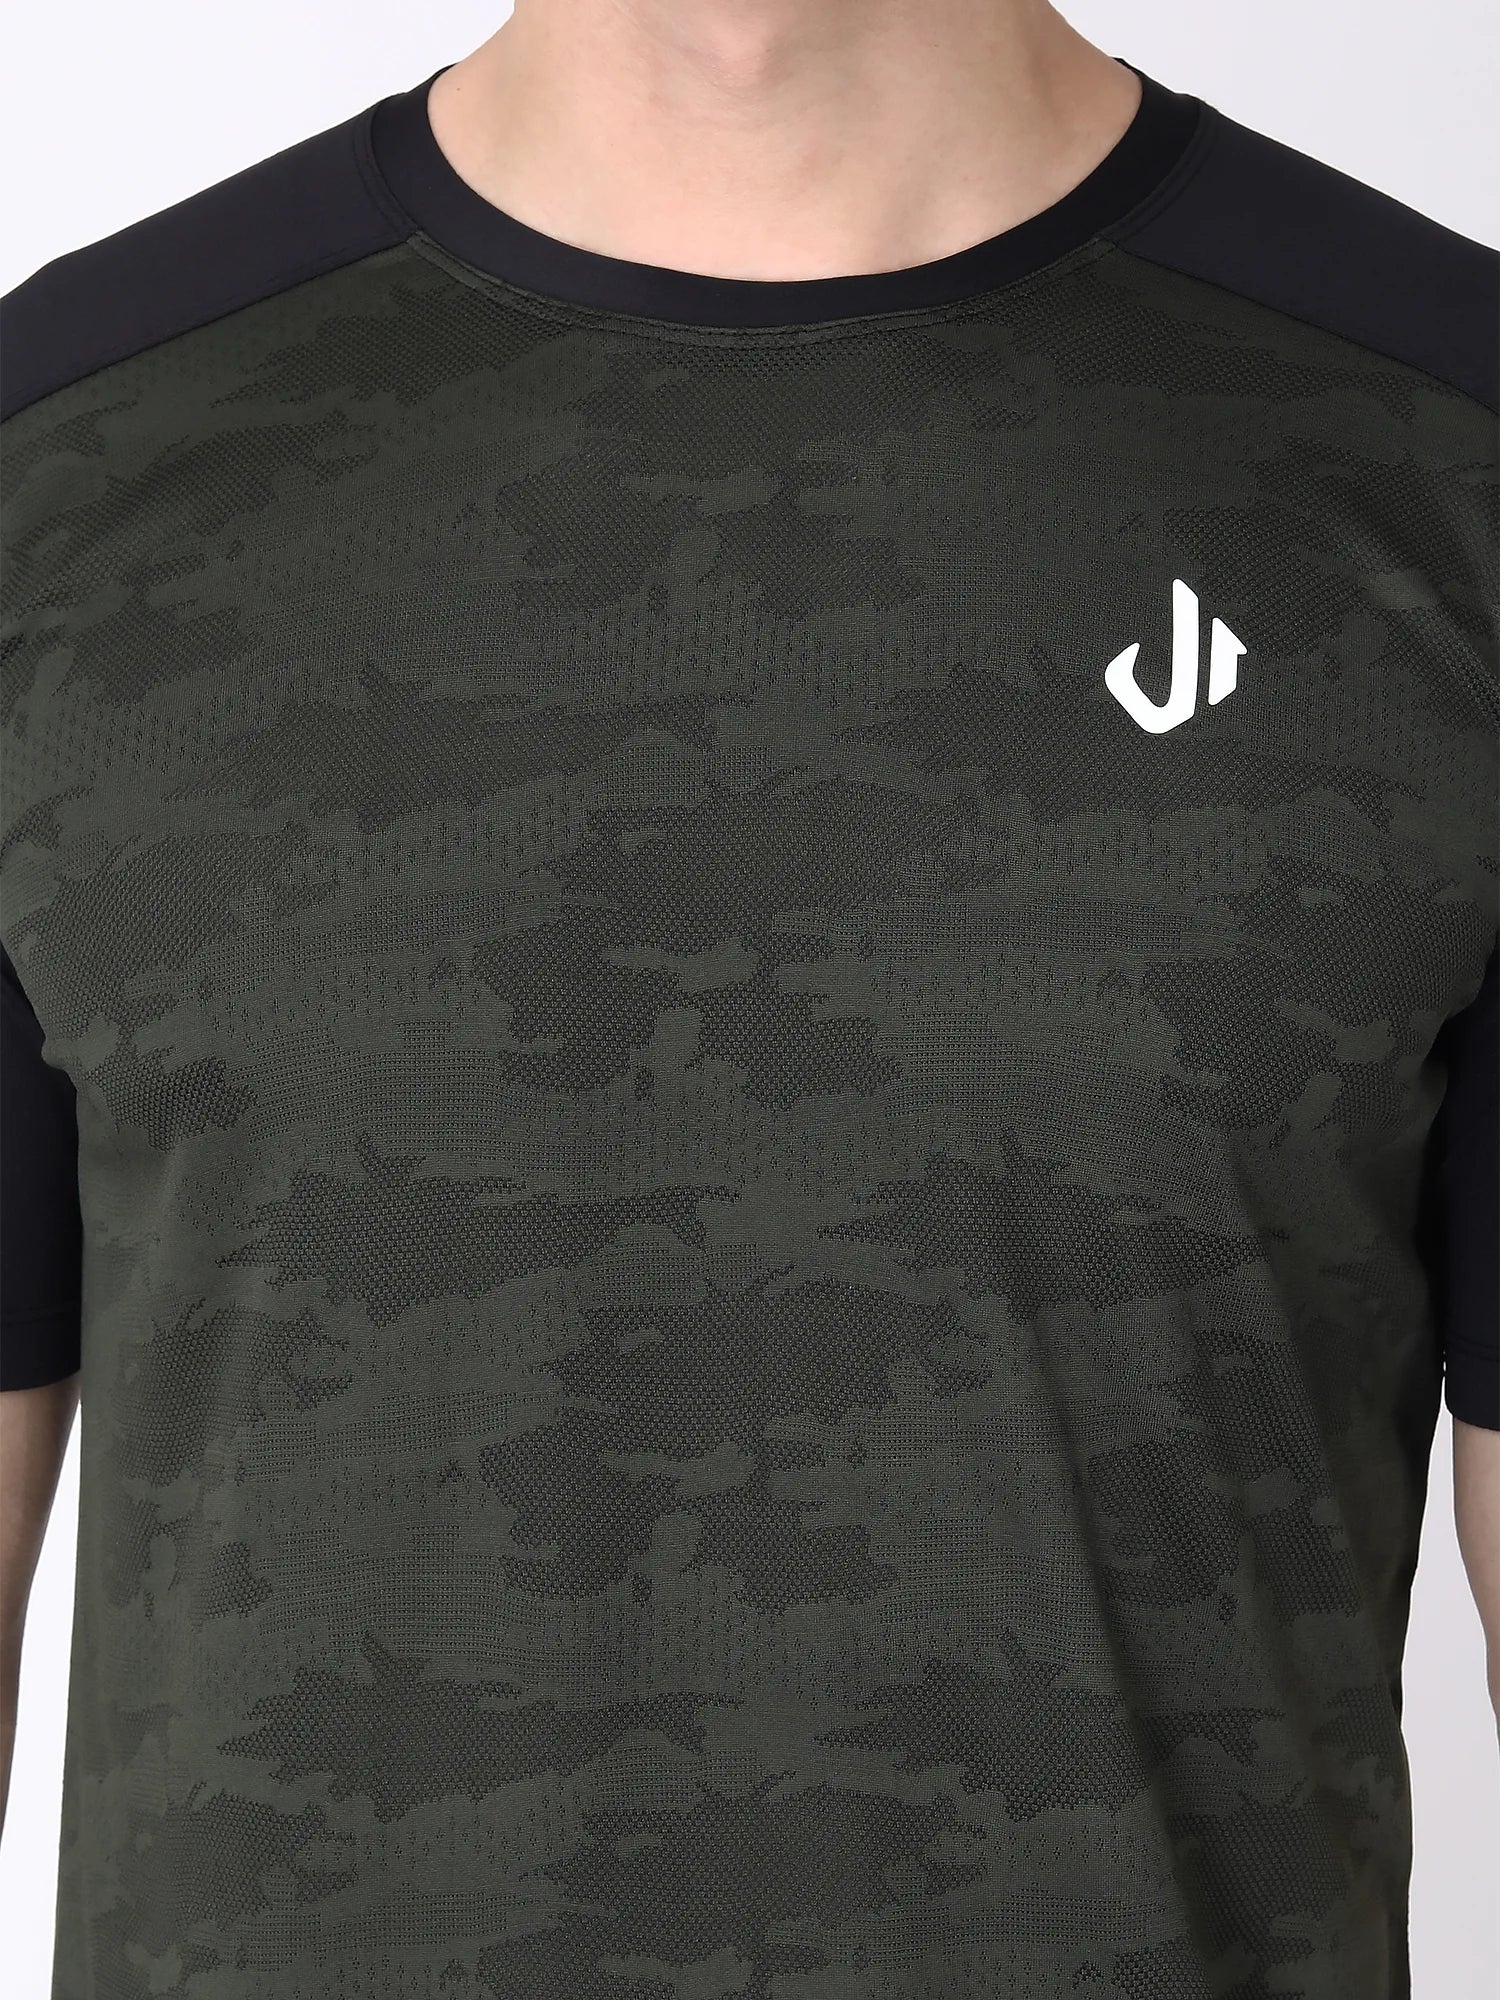 Jeffa Camouflage Jacquard T-shirt in Olive